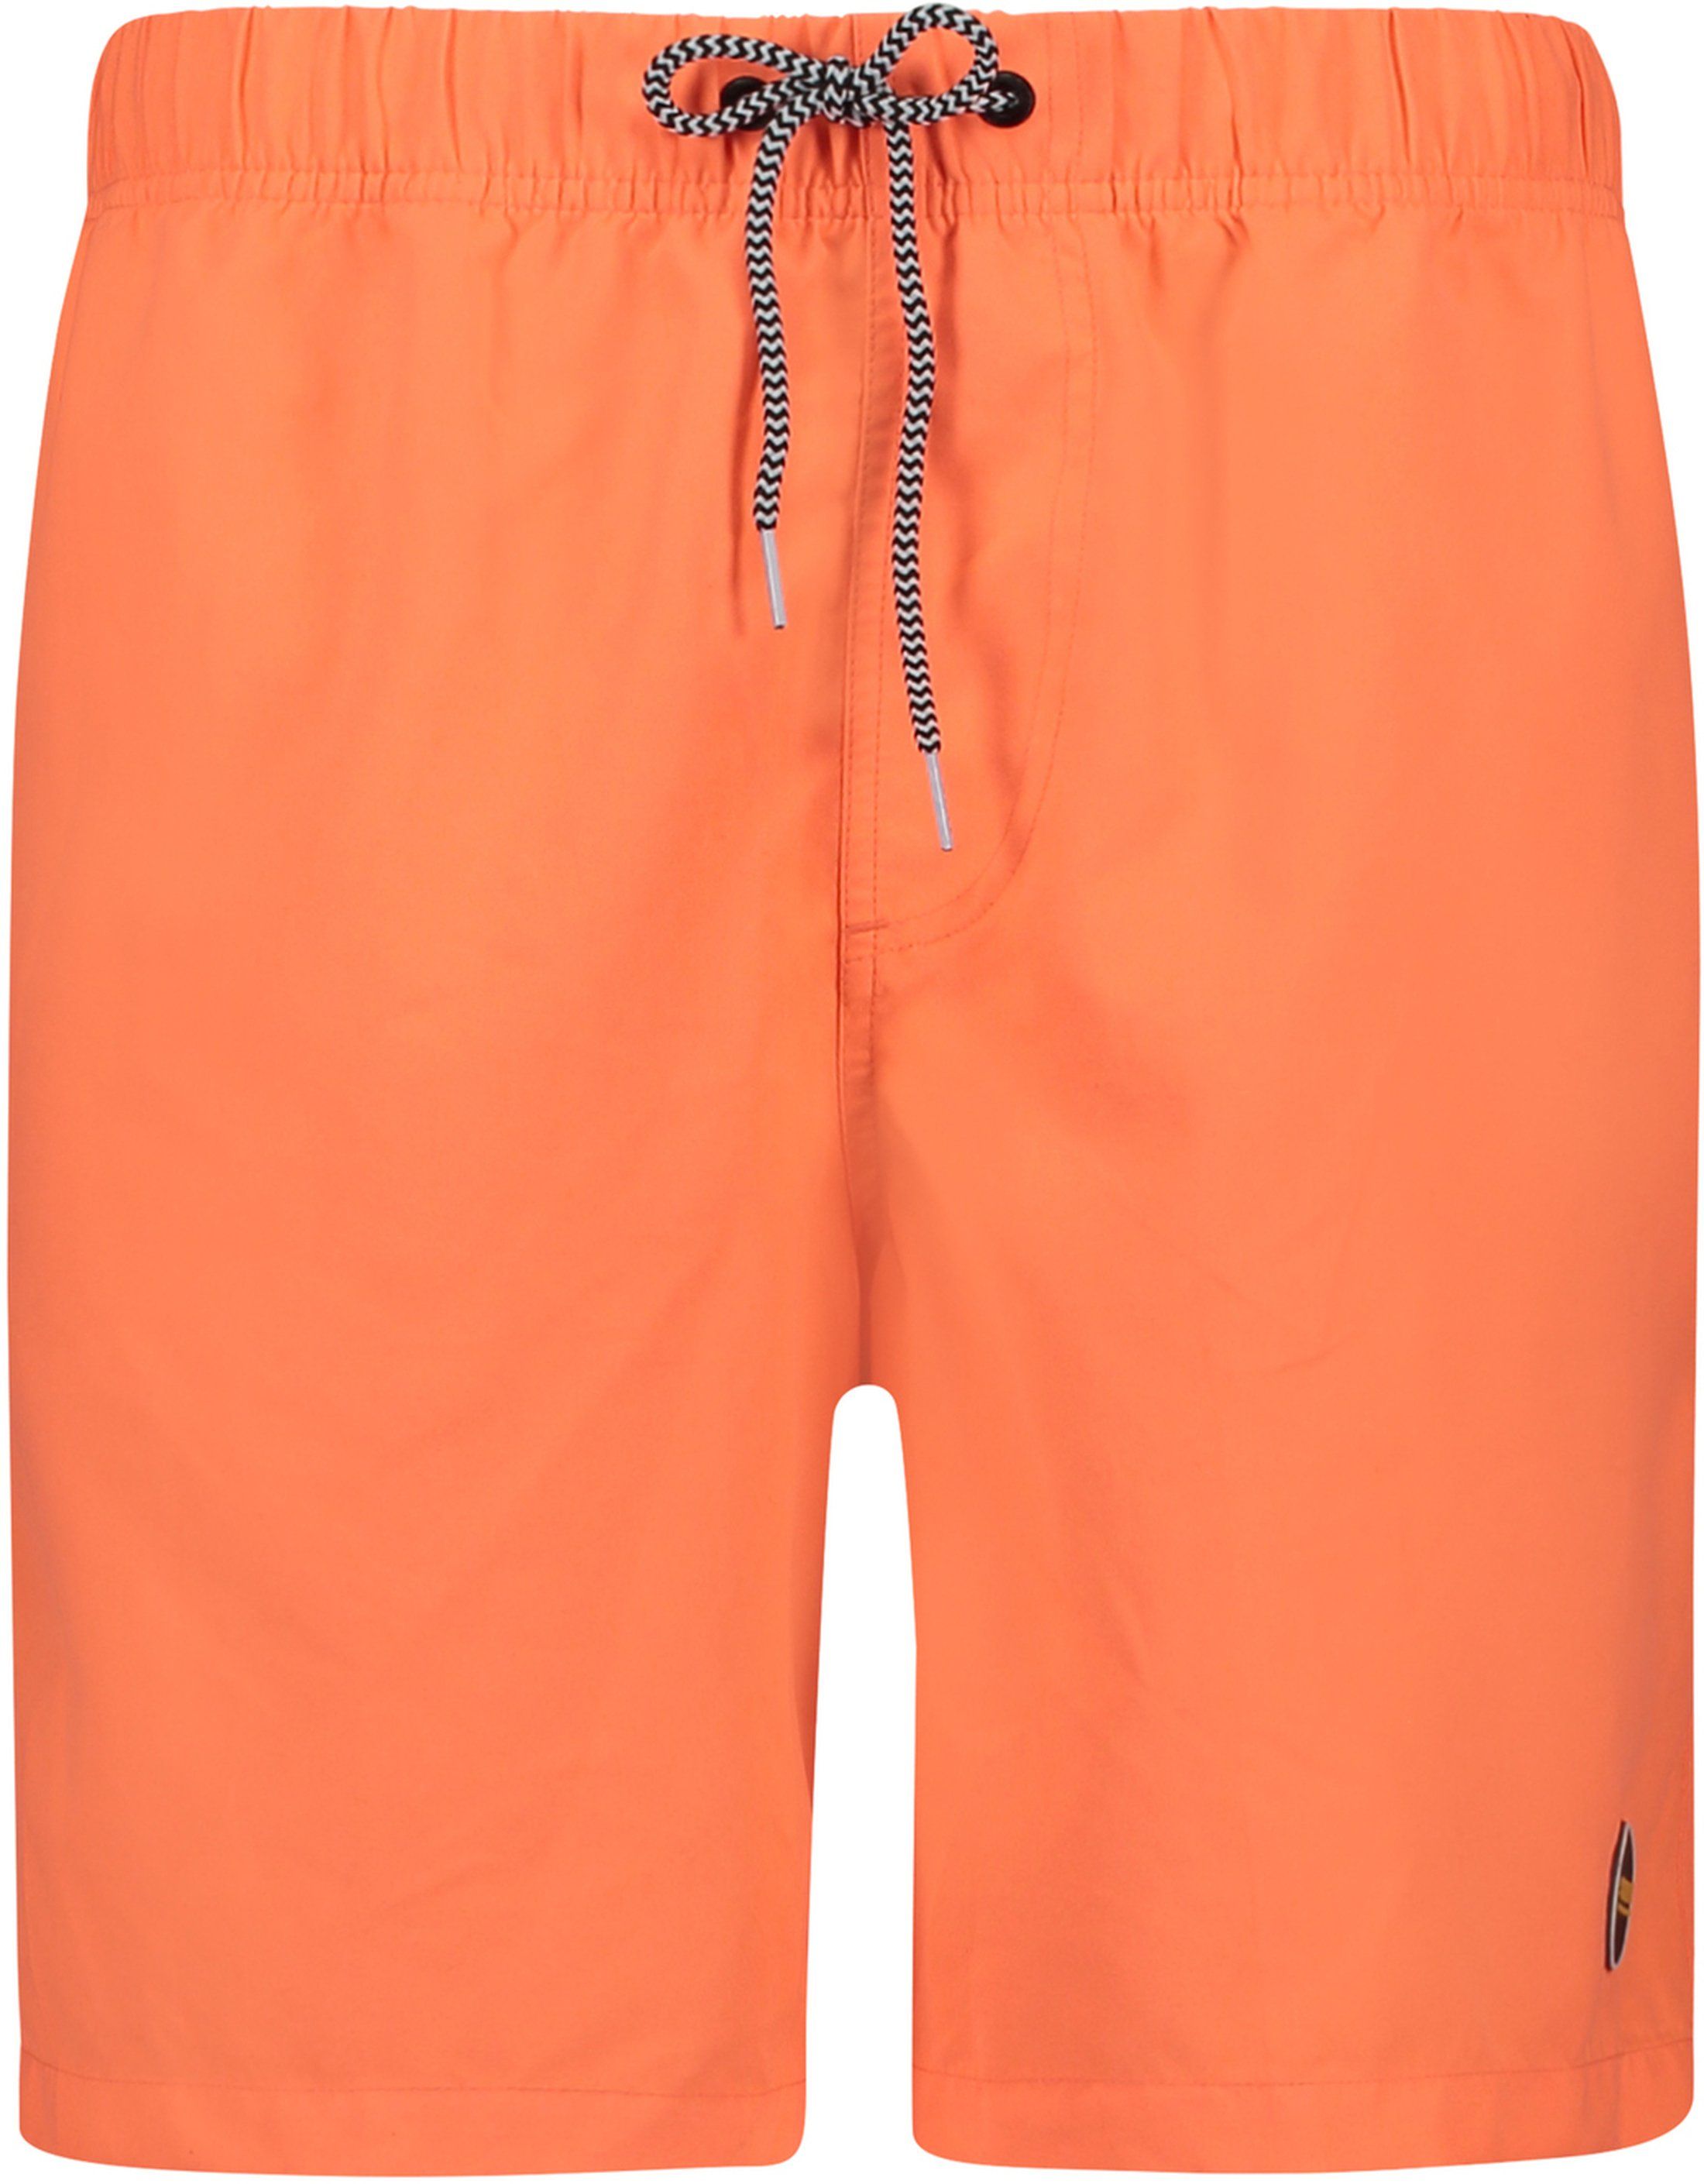 Shiwi Swimshorts Solid Mike Orange size L